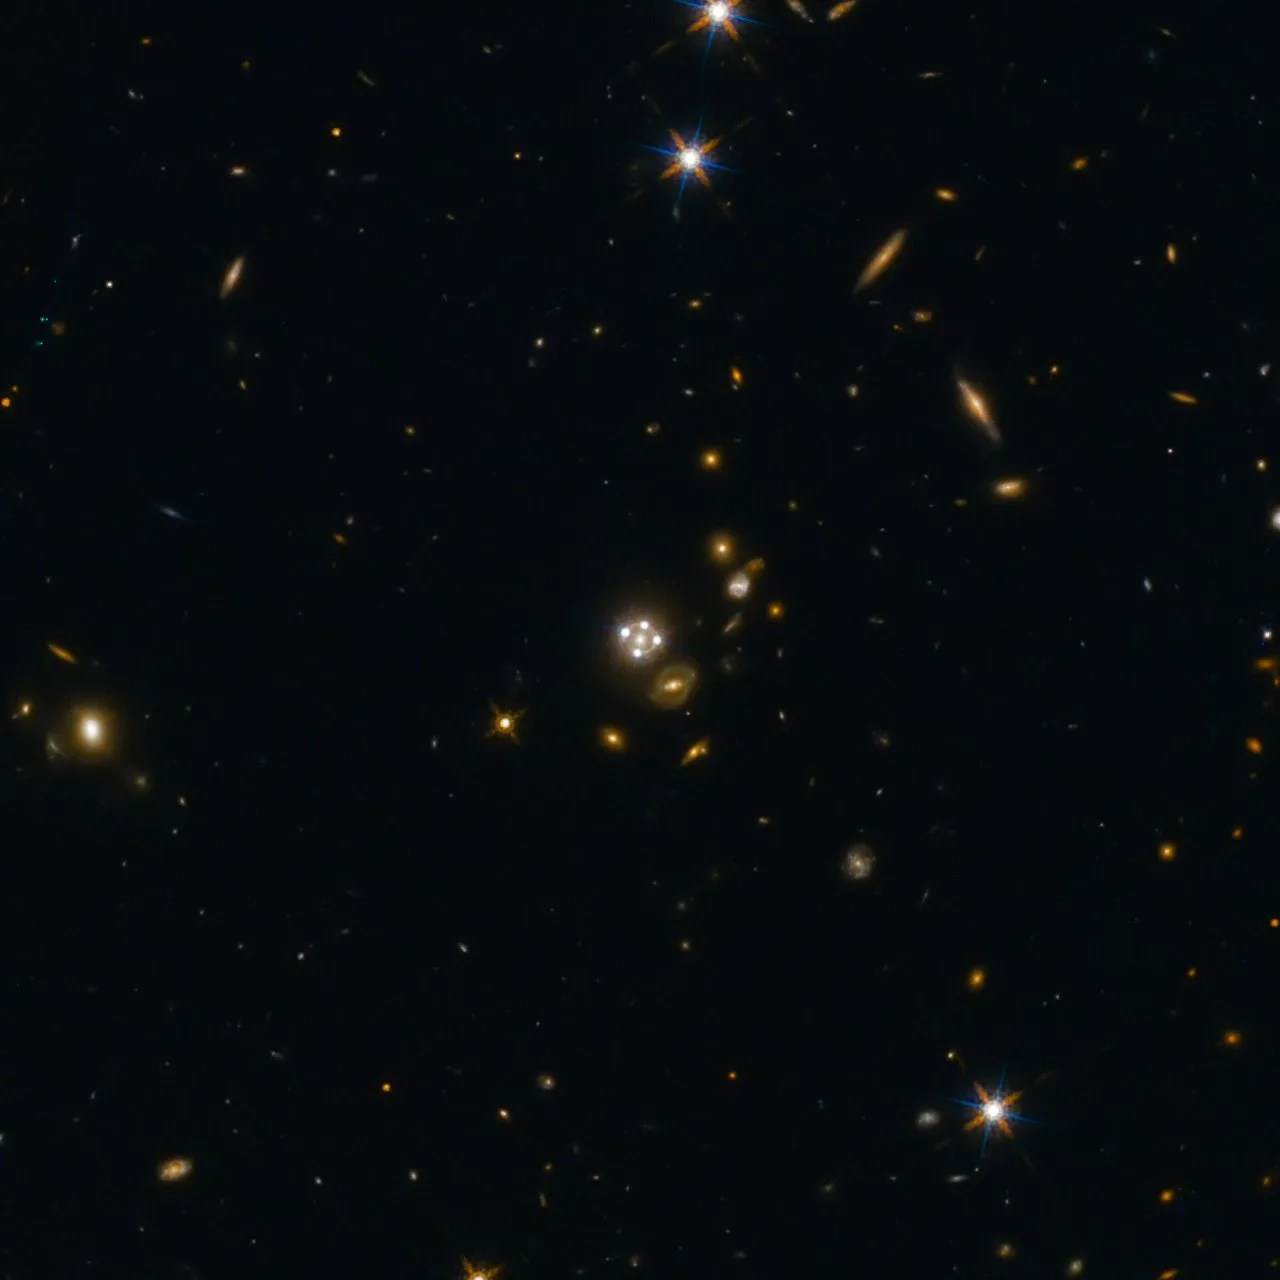 galaxies sprinkled across a star field